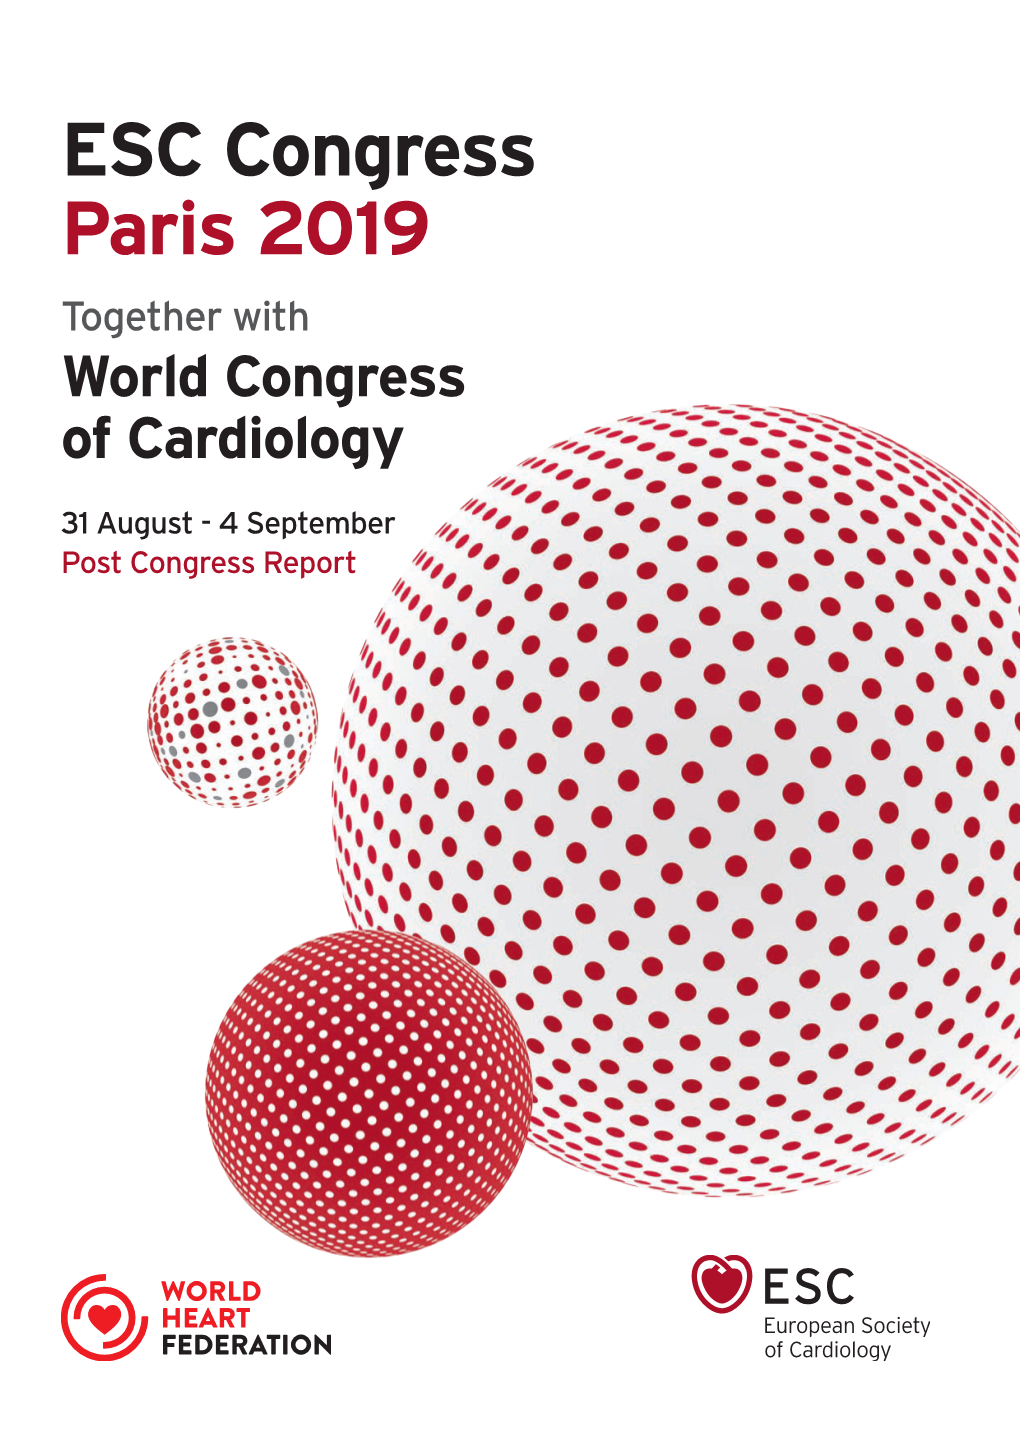 ESC Congress Paris 2019 Together with World Congress of Cardiology